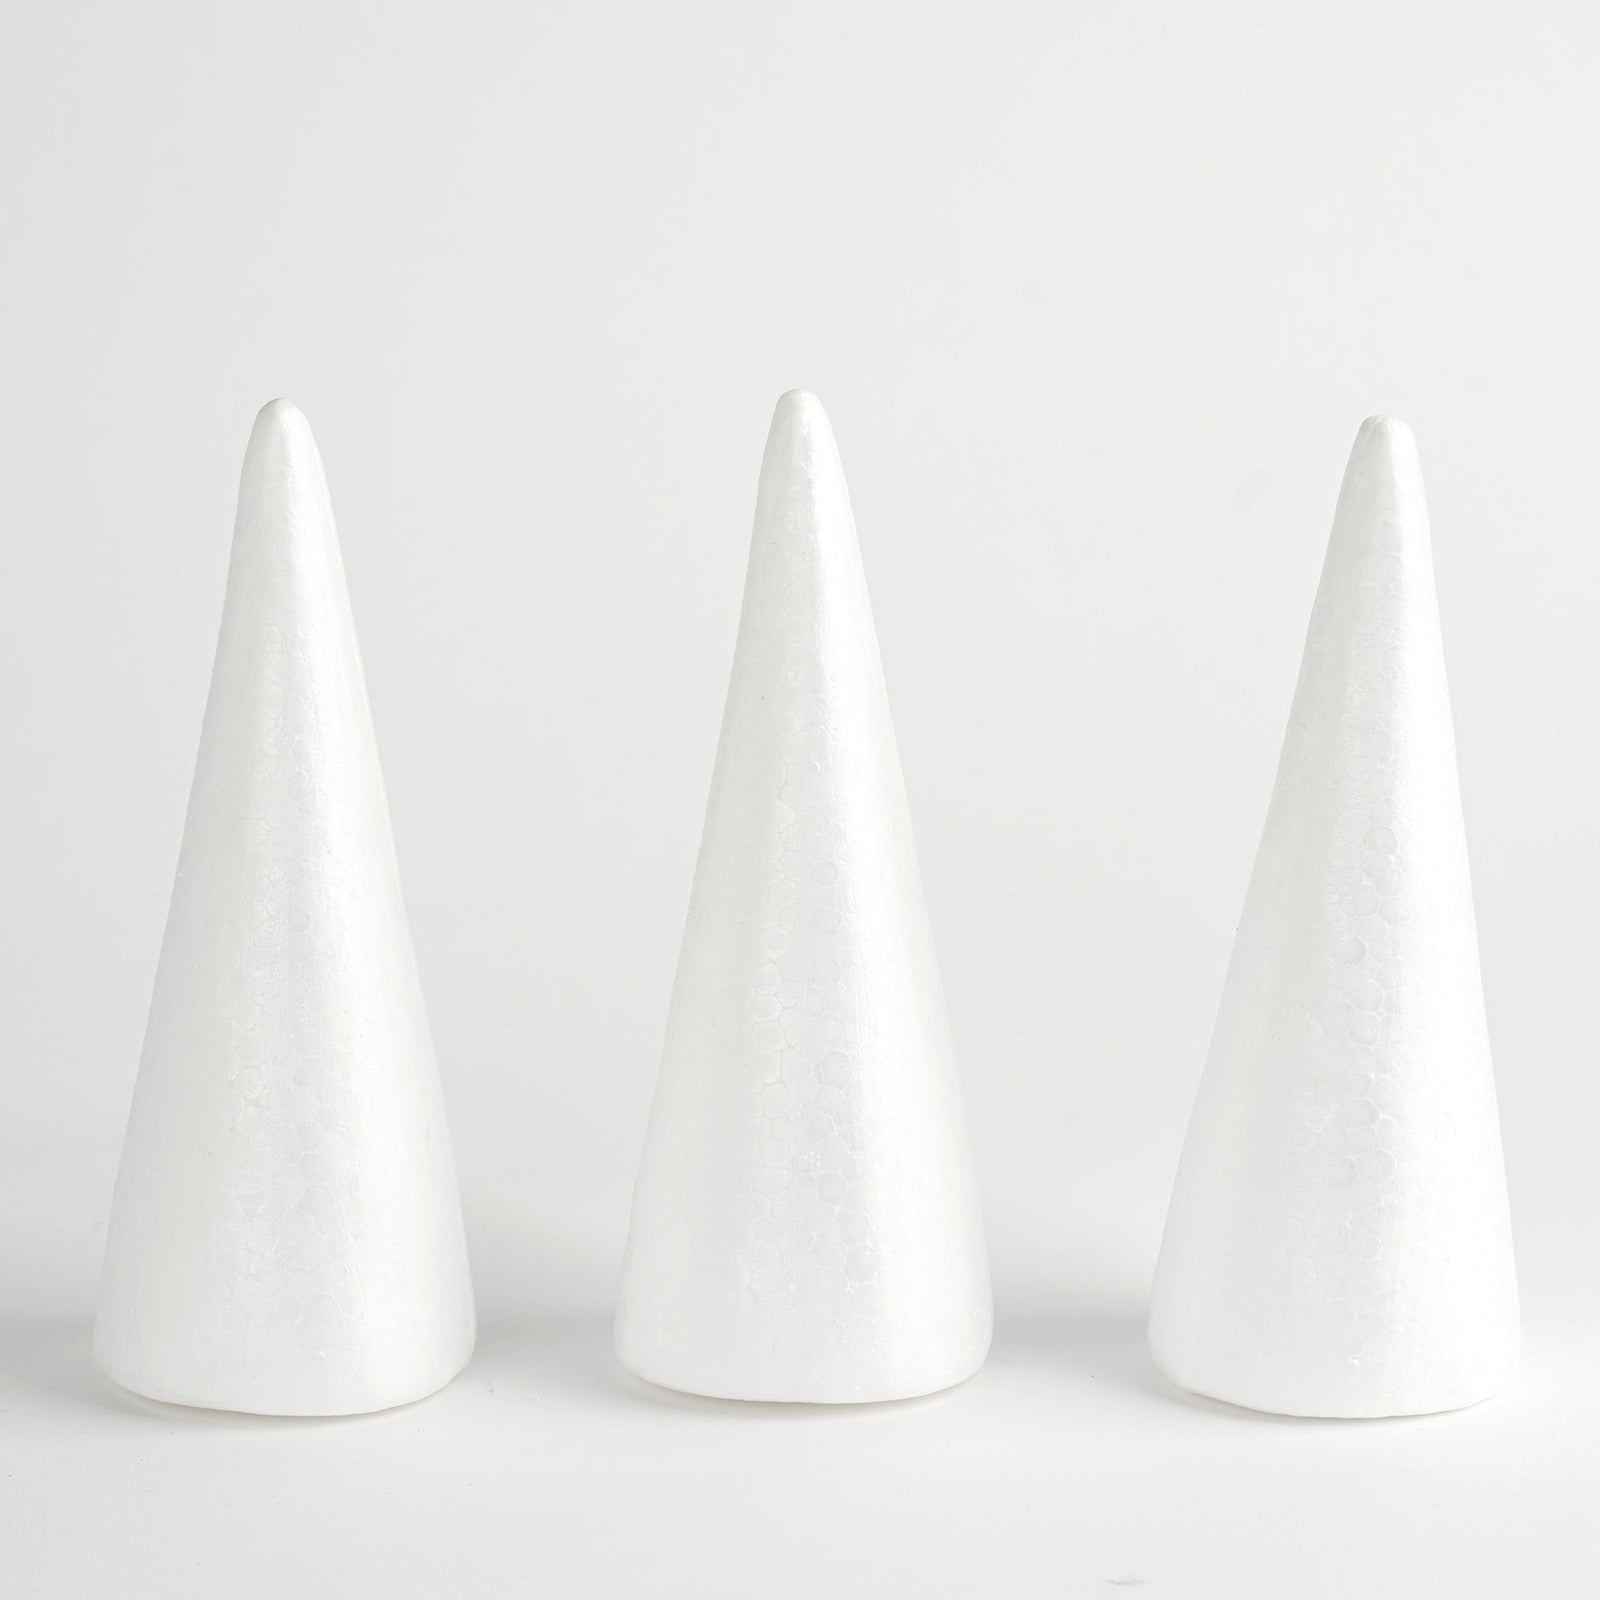 12 x Customizable Showcase Cones - 8 inch White Styrofoam